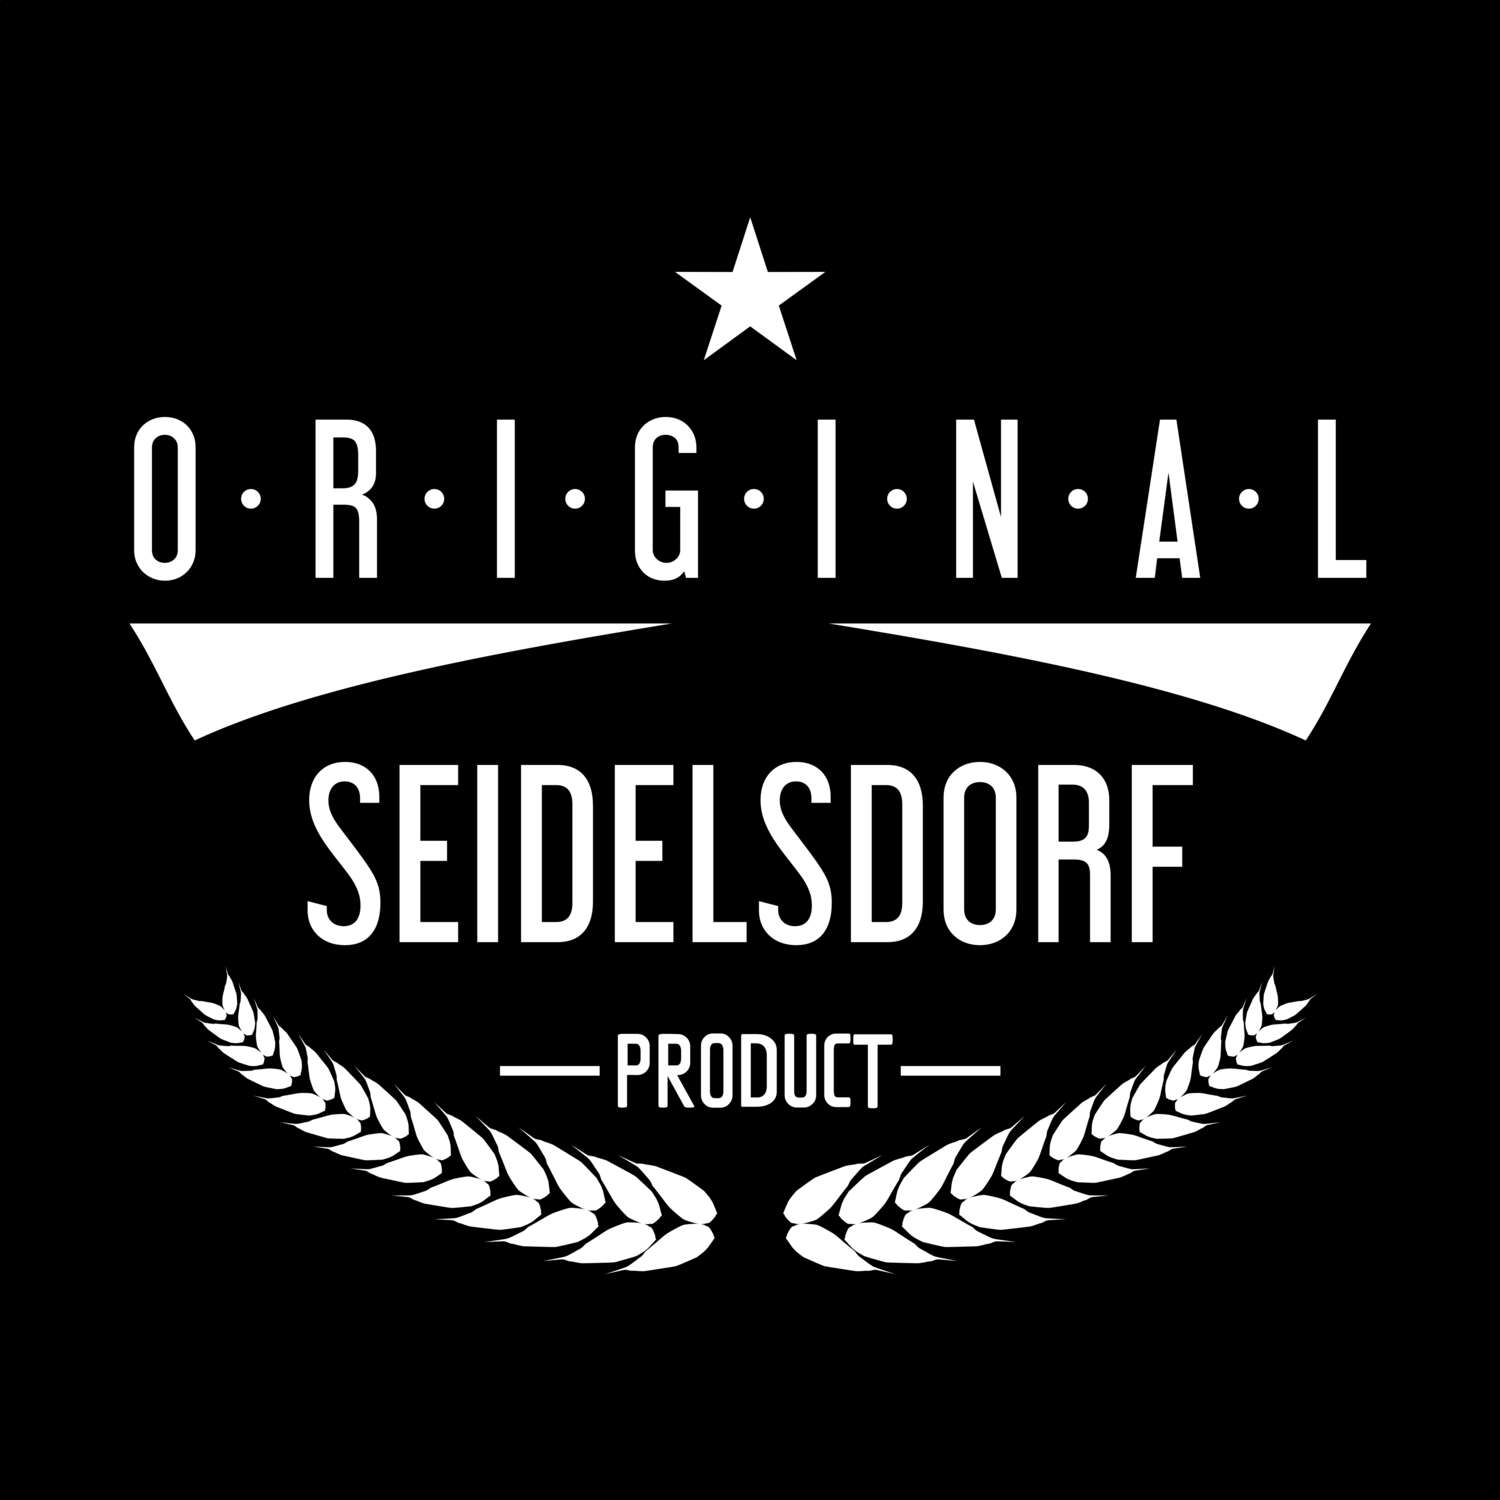 Seidelsdorf T-Shirt »Original Product«